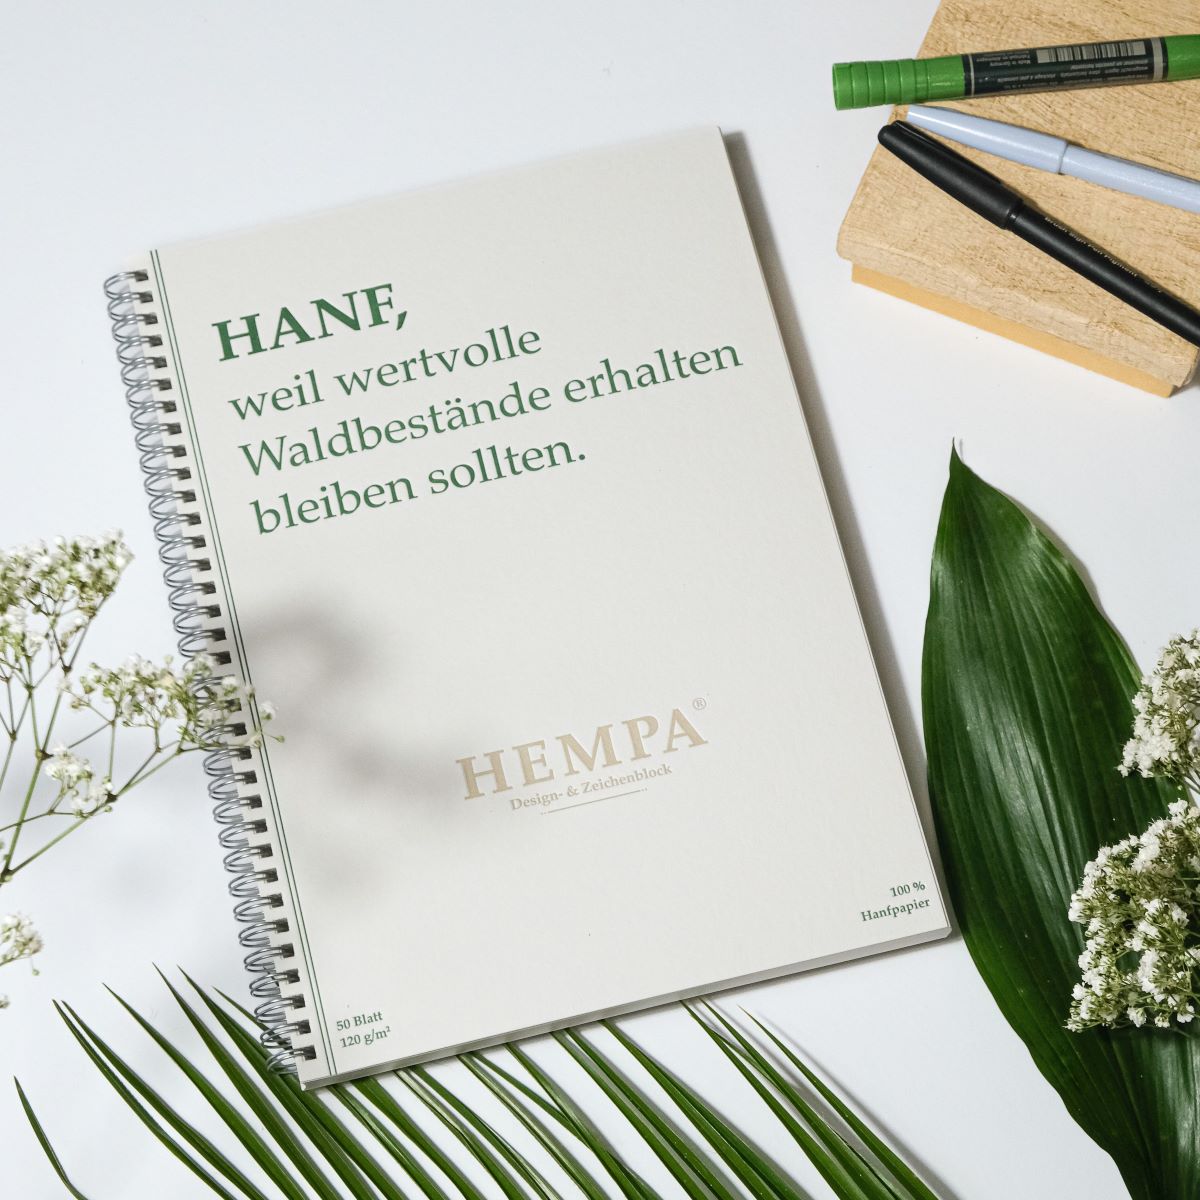 Made from natural raw materials: hemp paper from Hempa